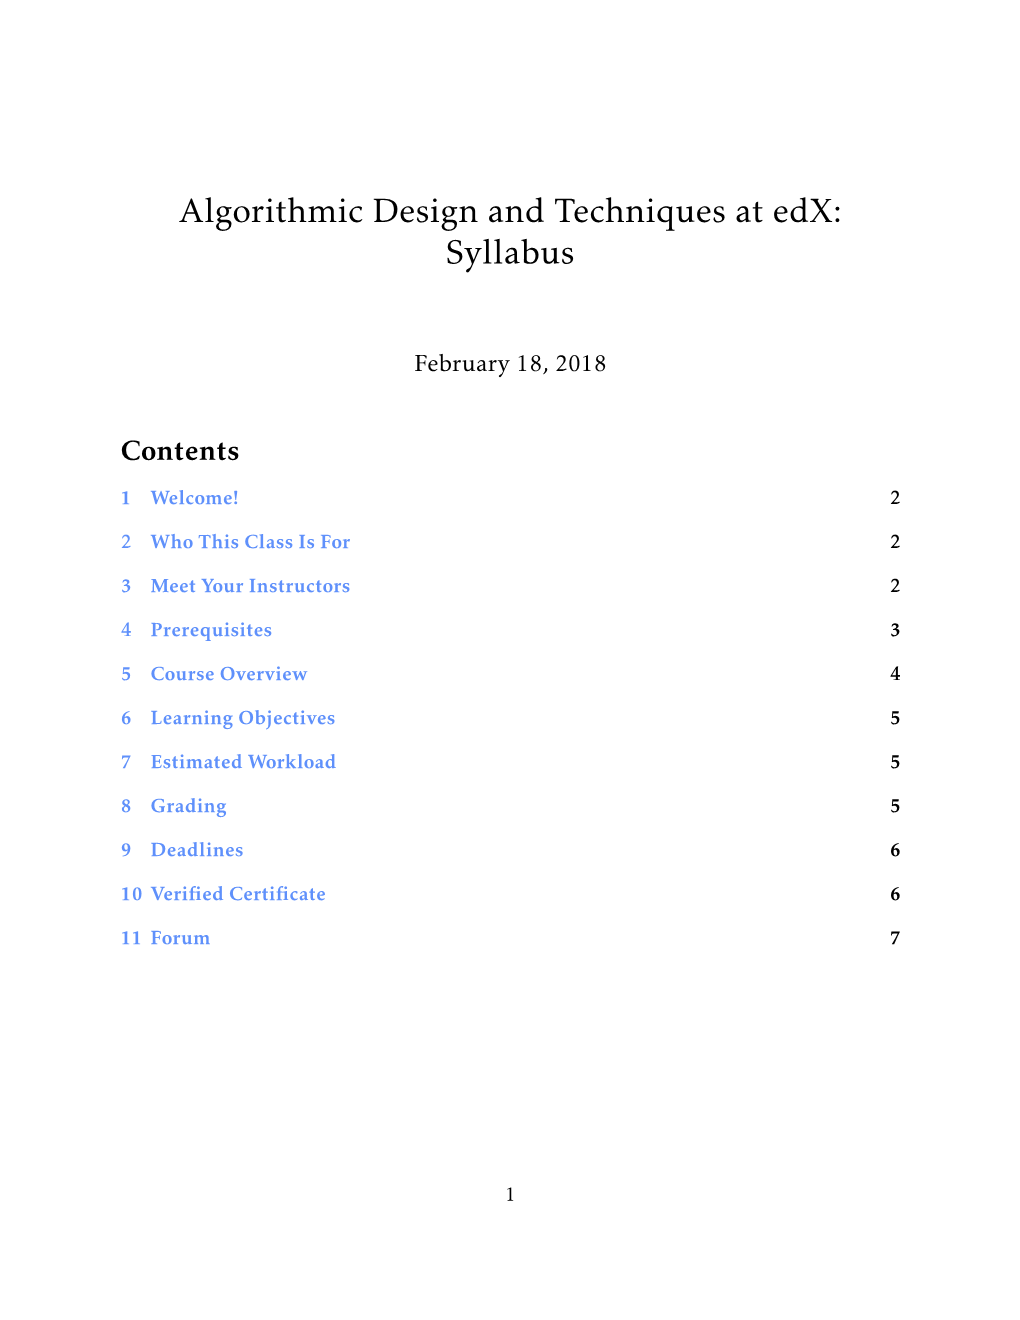 Algorithmic Design and Techniques at Edx: Syllabus